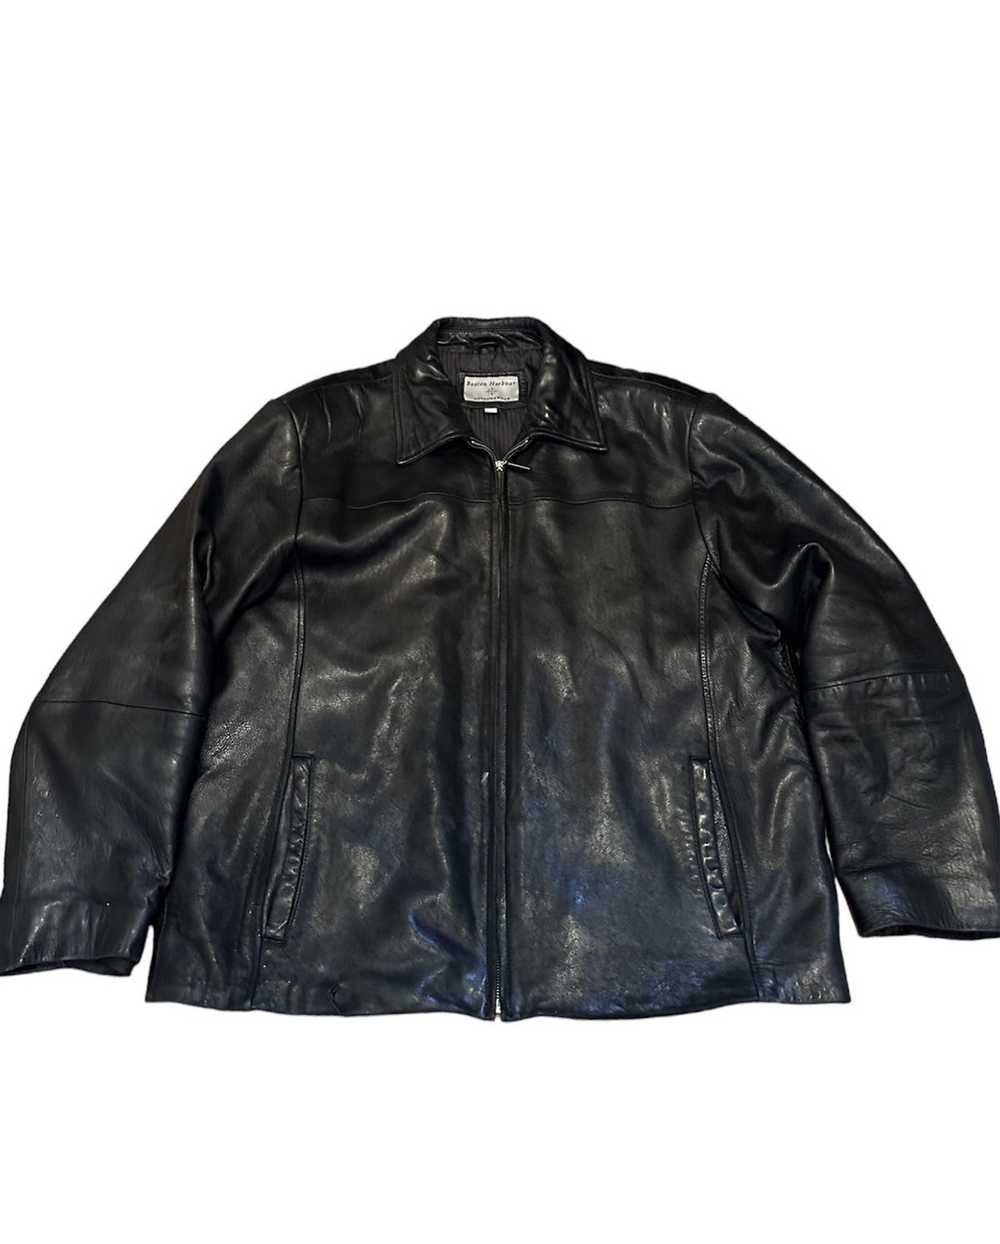 Vintage Boston Harbour leather jacket - image 1